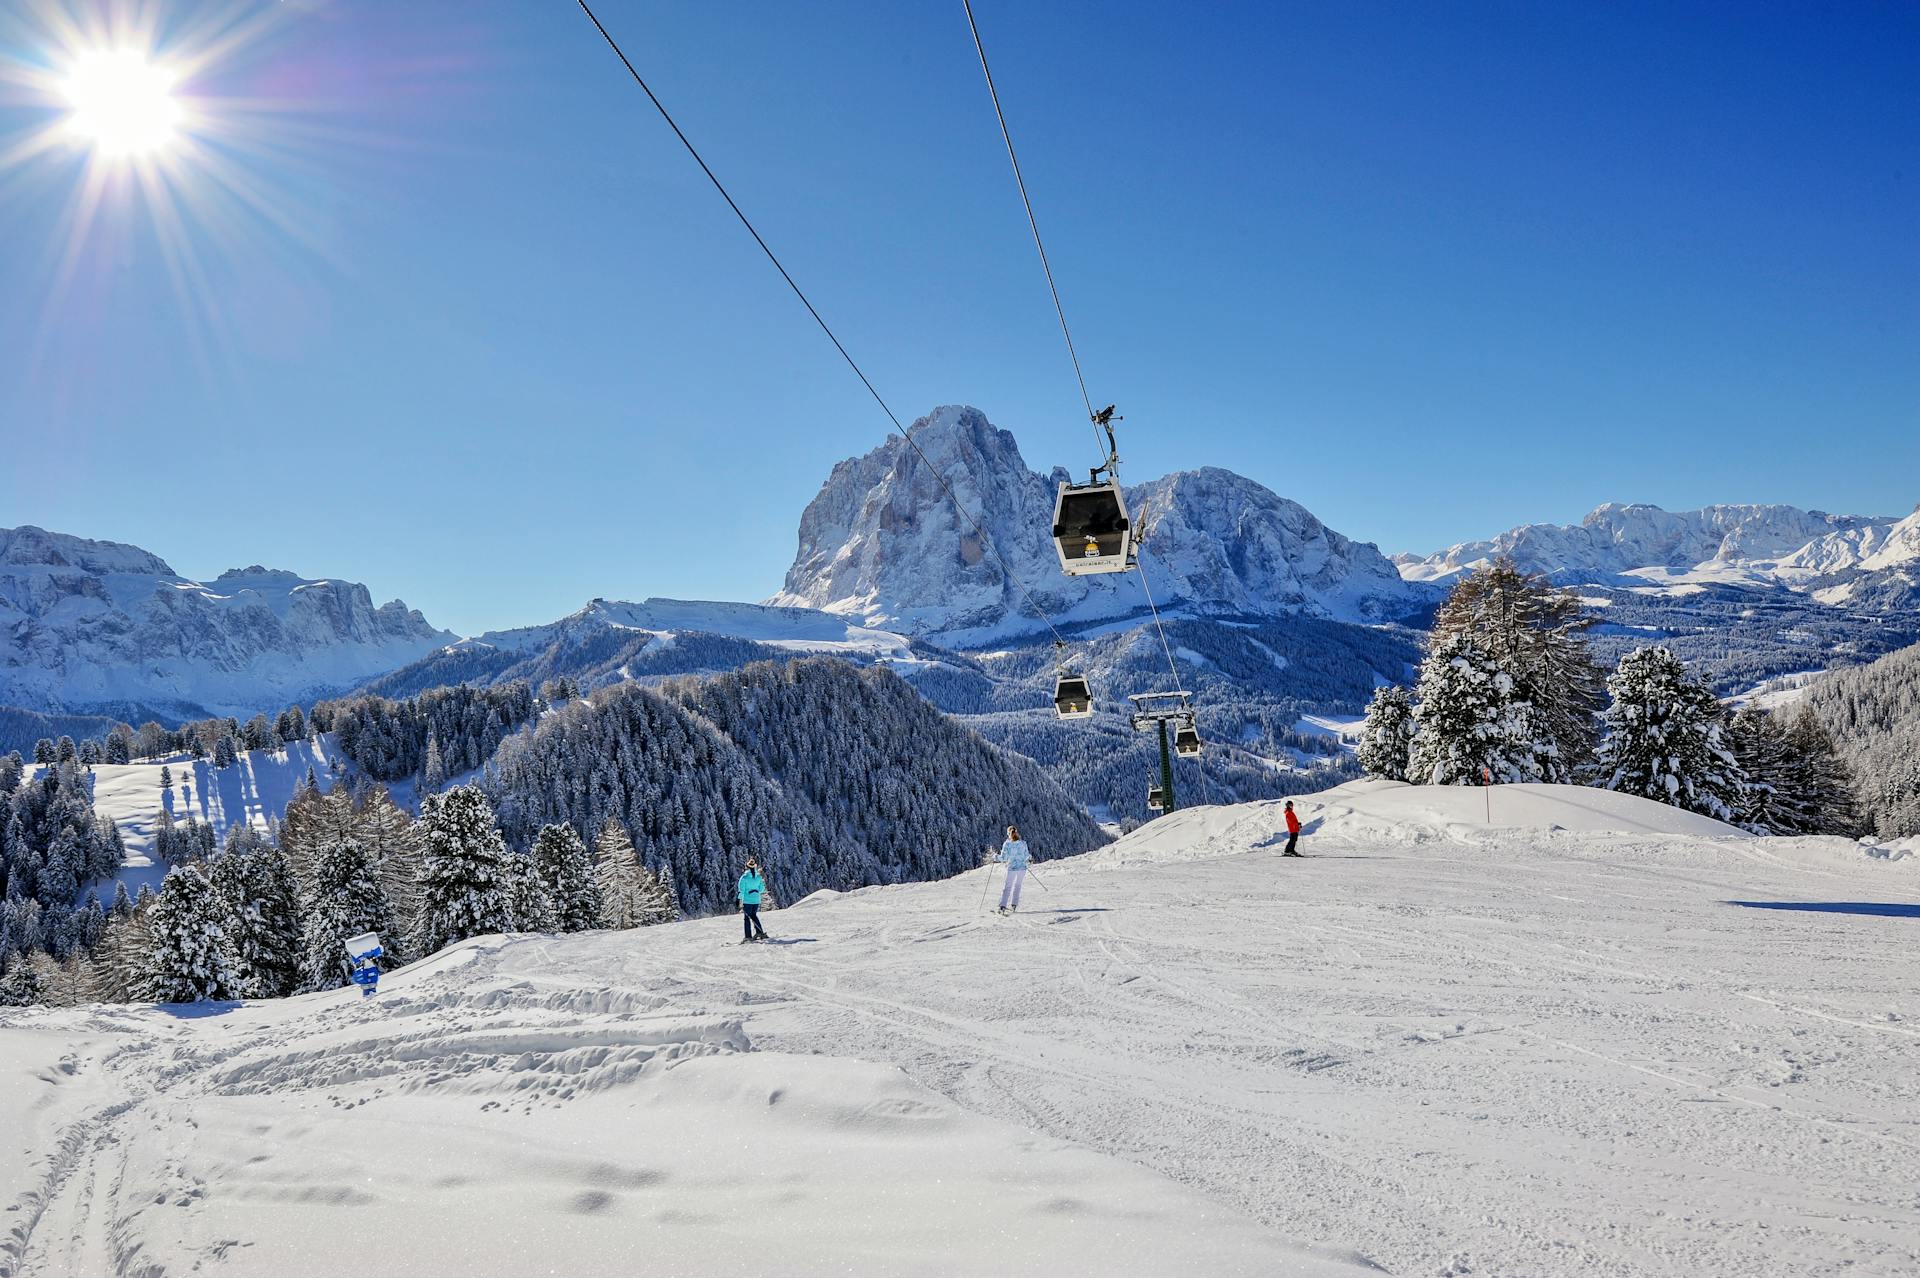 Skiiers on ski slope under Gondola